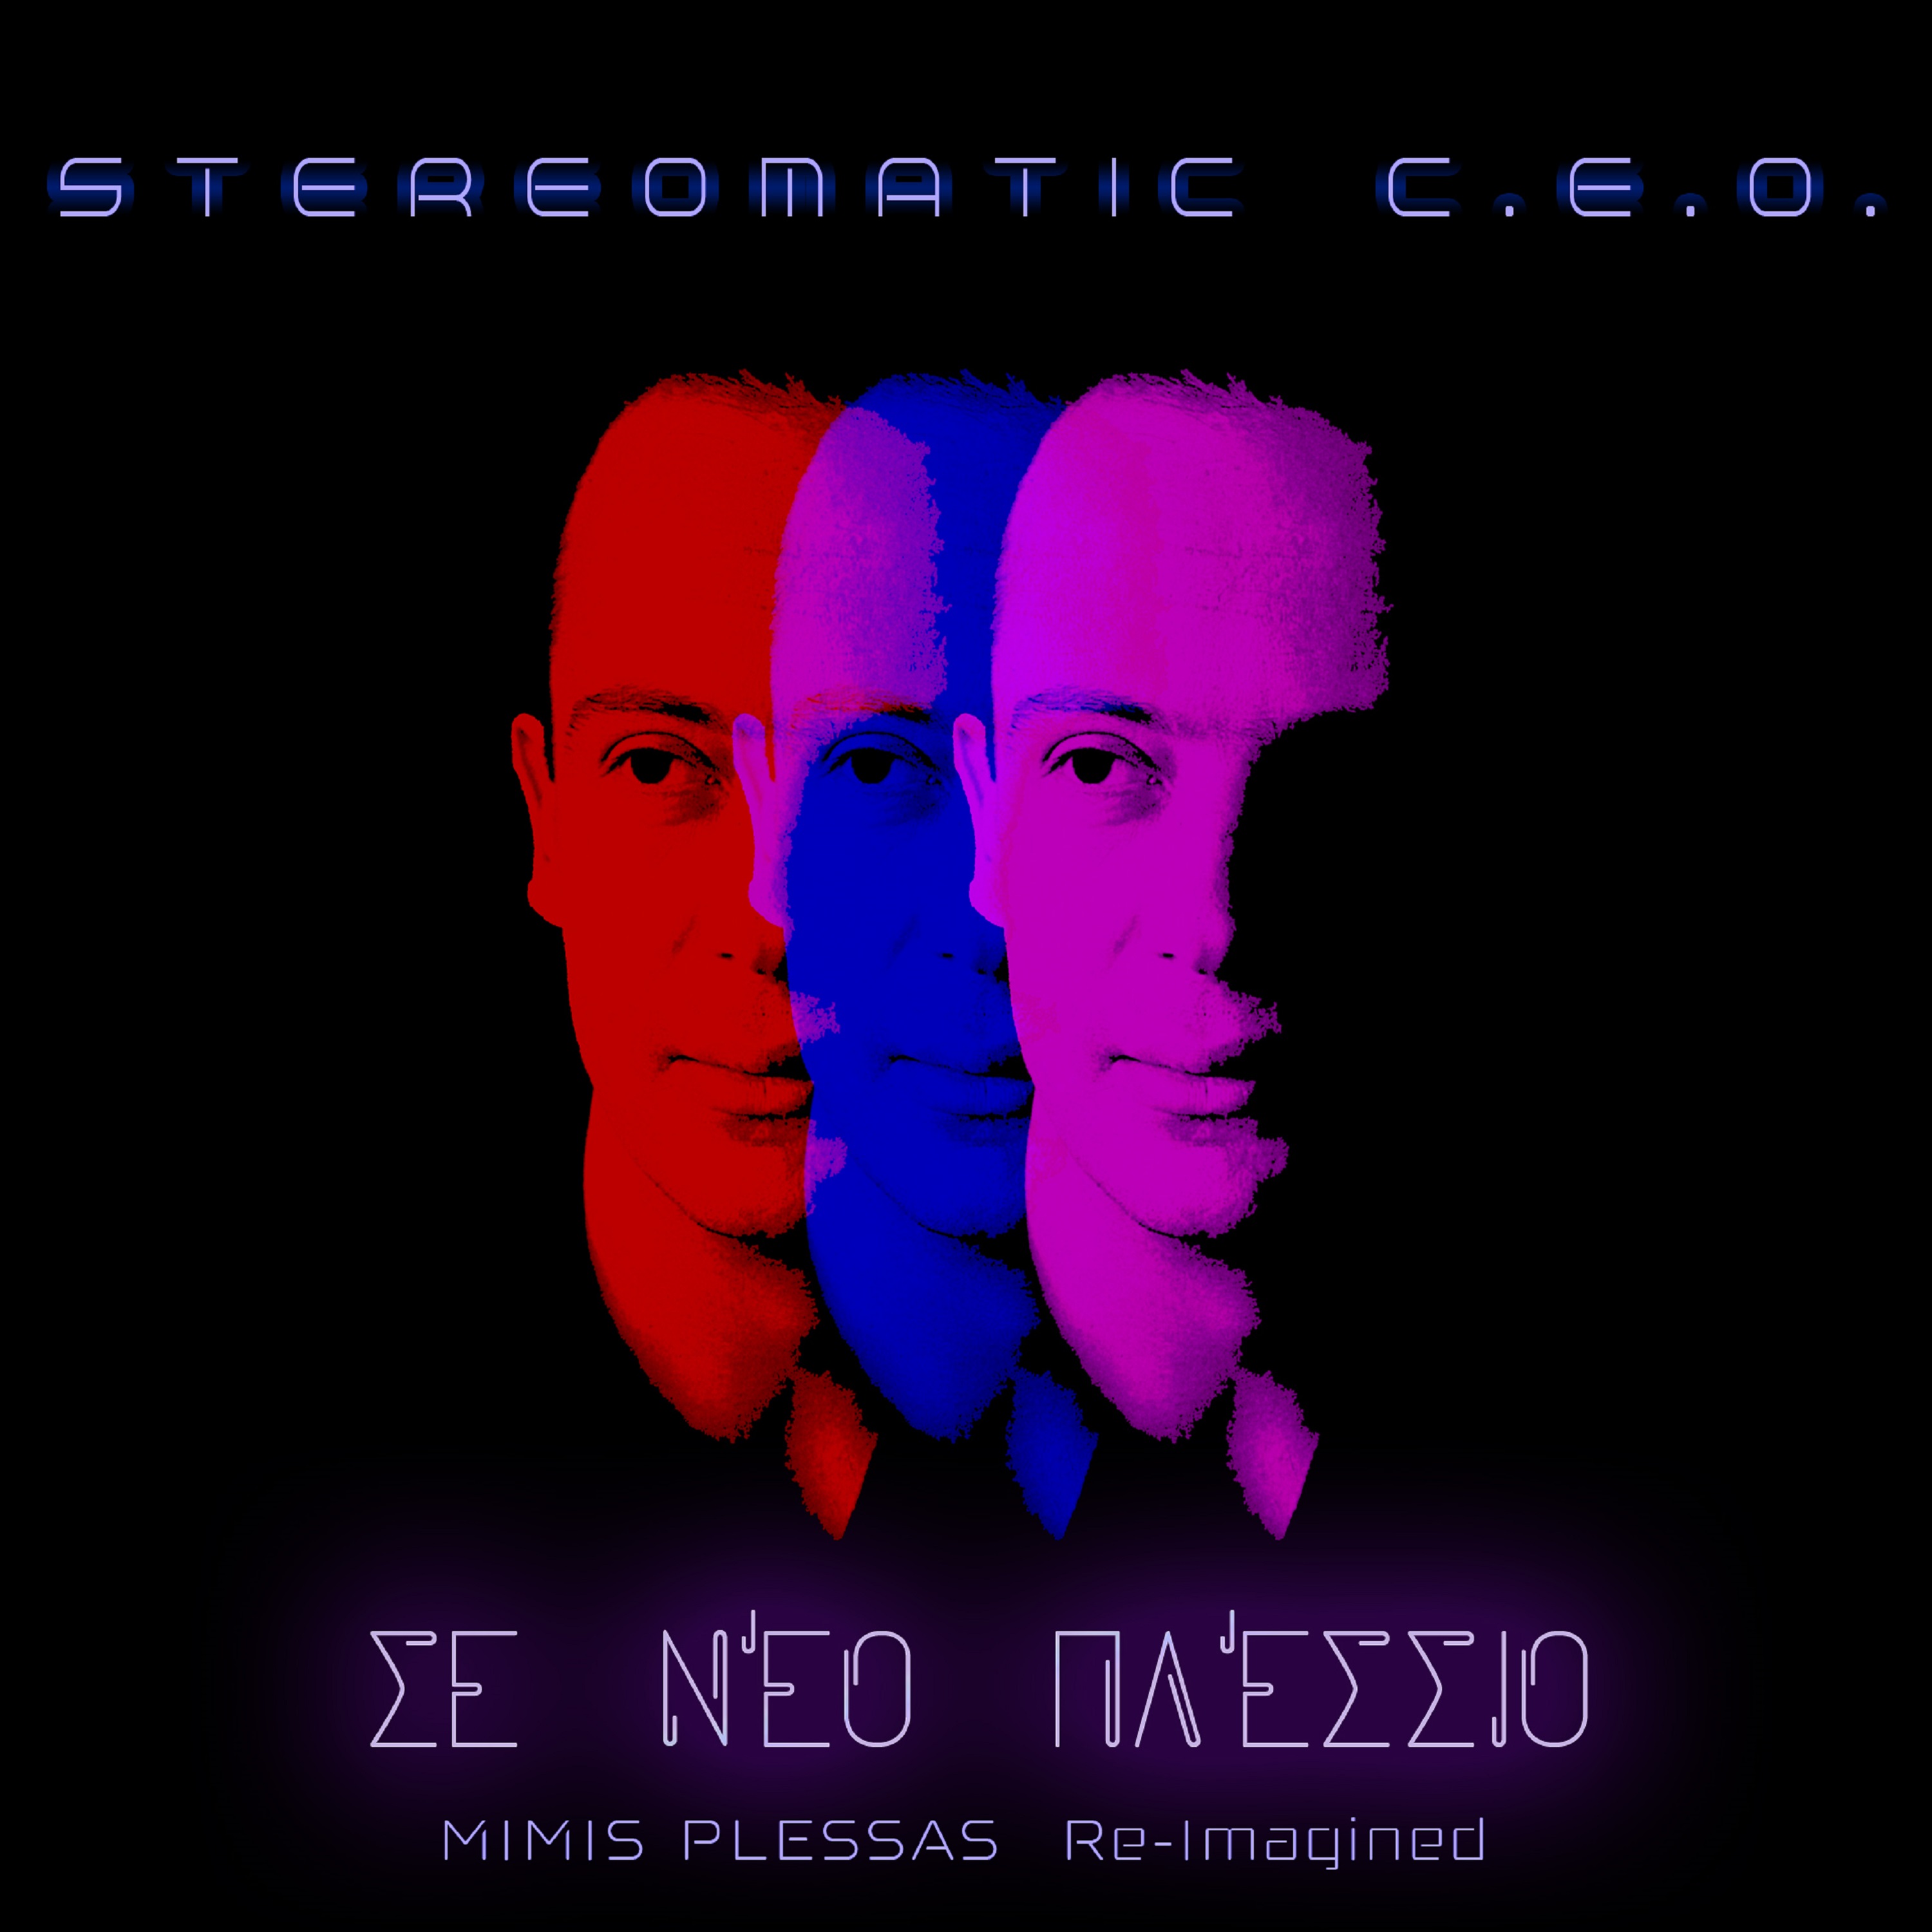 stereomatic_c.e.o._mimis_plessas_-_se_neo_plessio.jpg